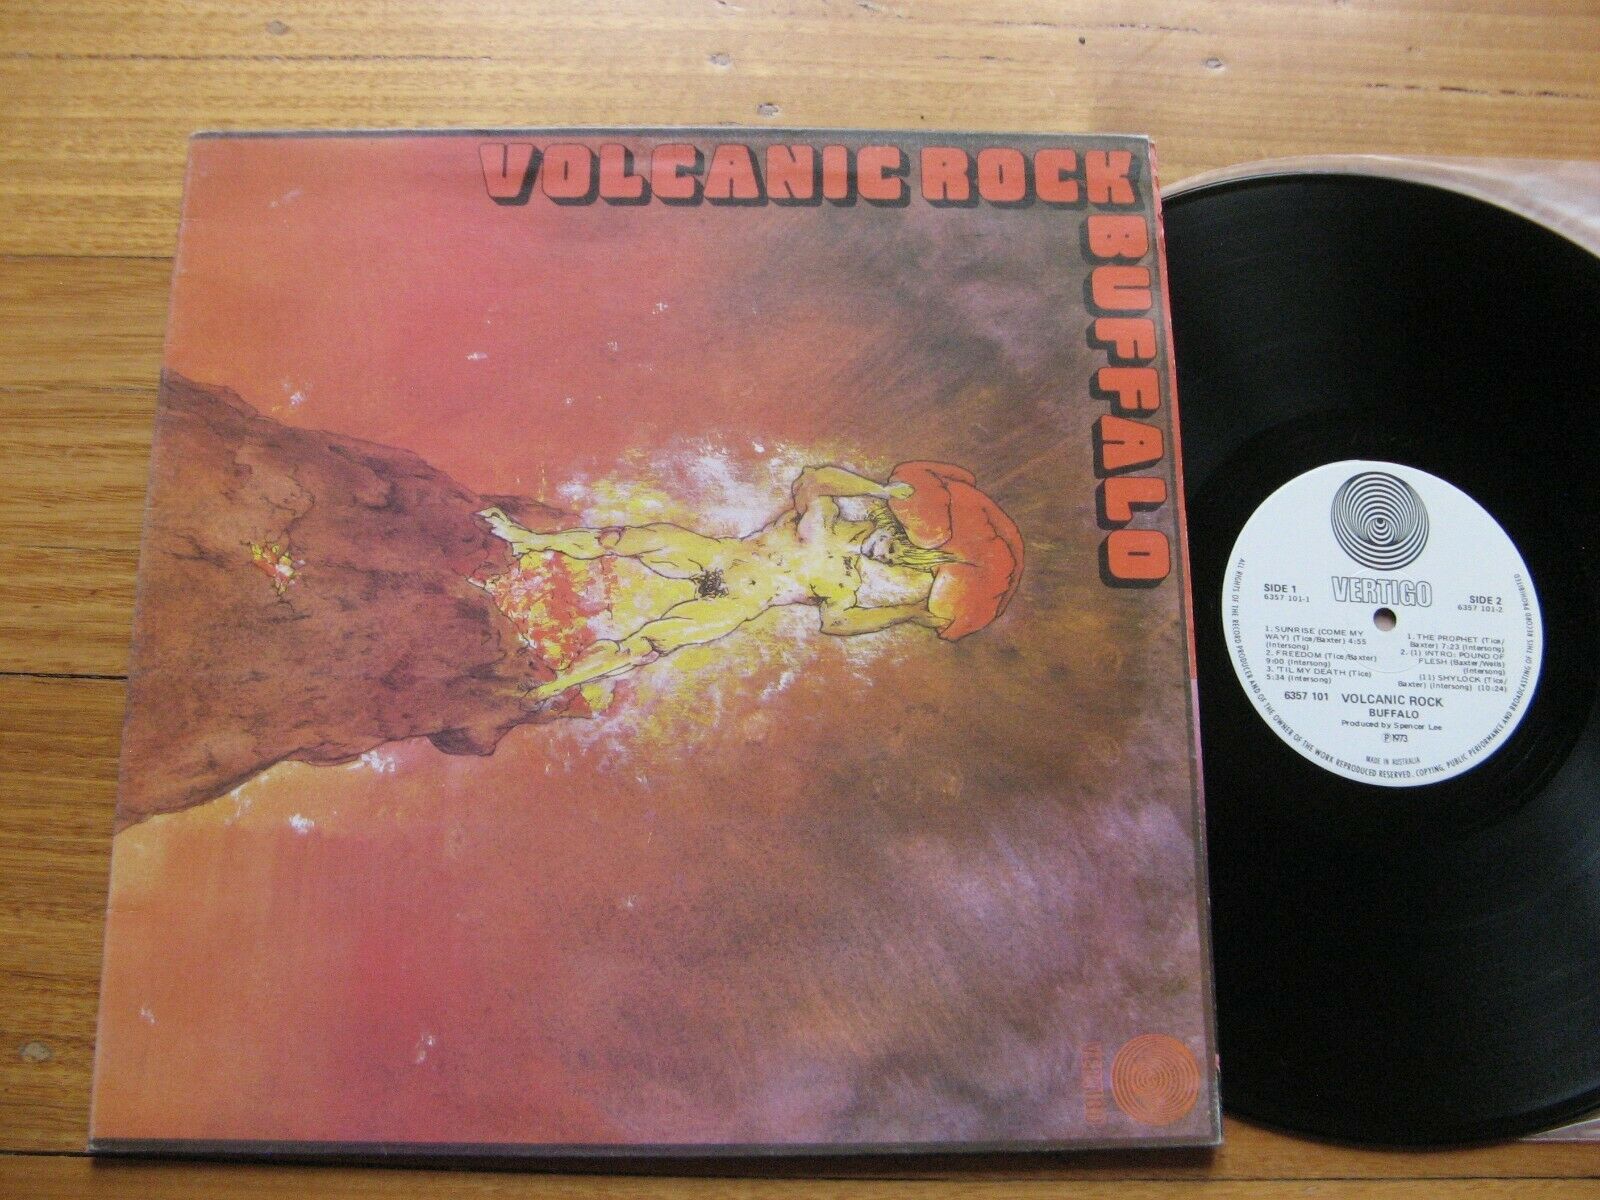 Pic 2 BUFFALO - Volcanic Rock LP - EX COND. 1ST OZ VERTIGO SWIRL + INSERT Prog / Psych